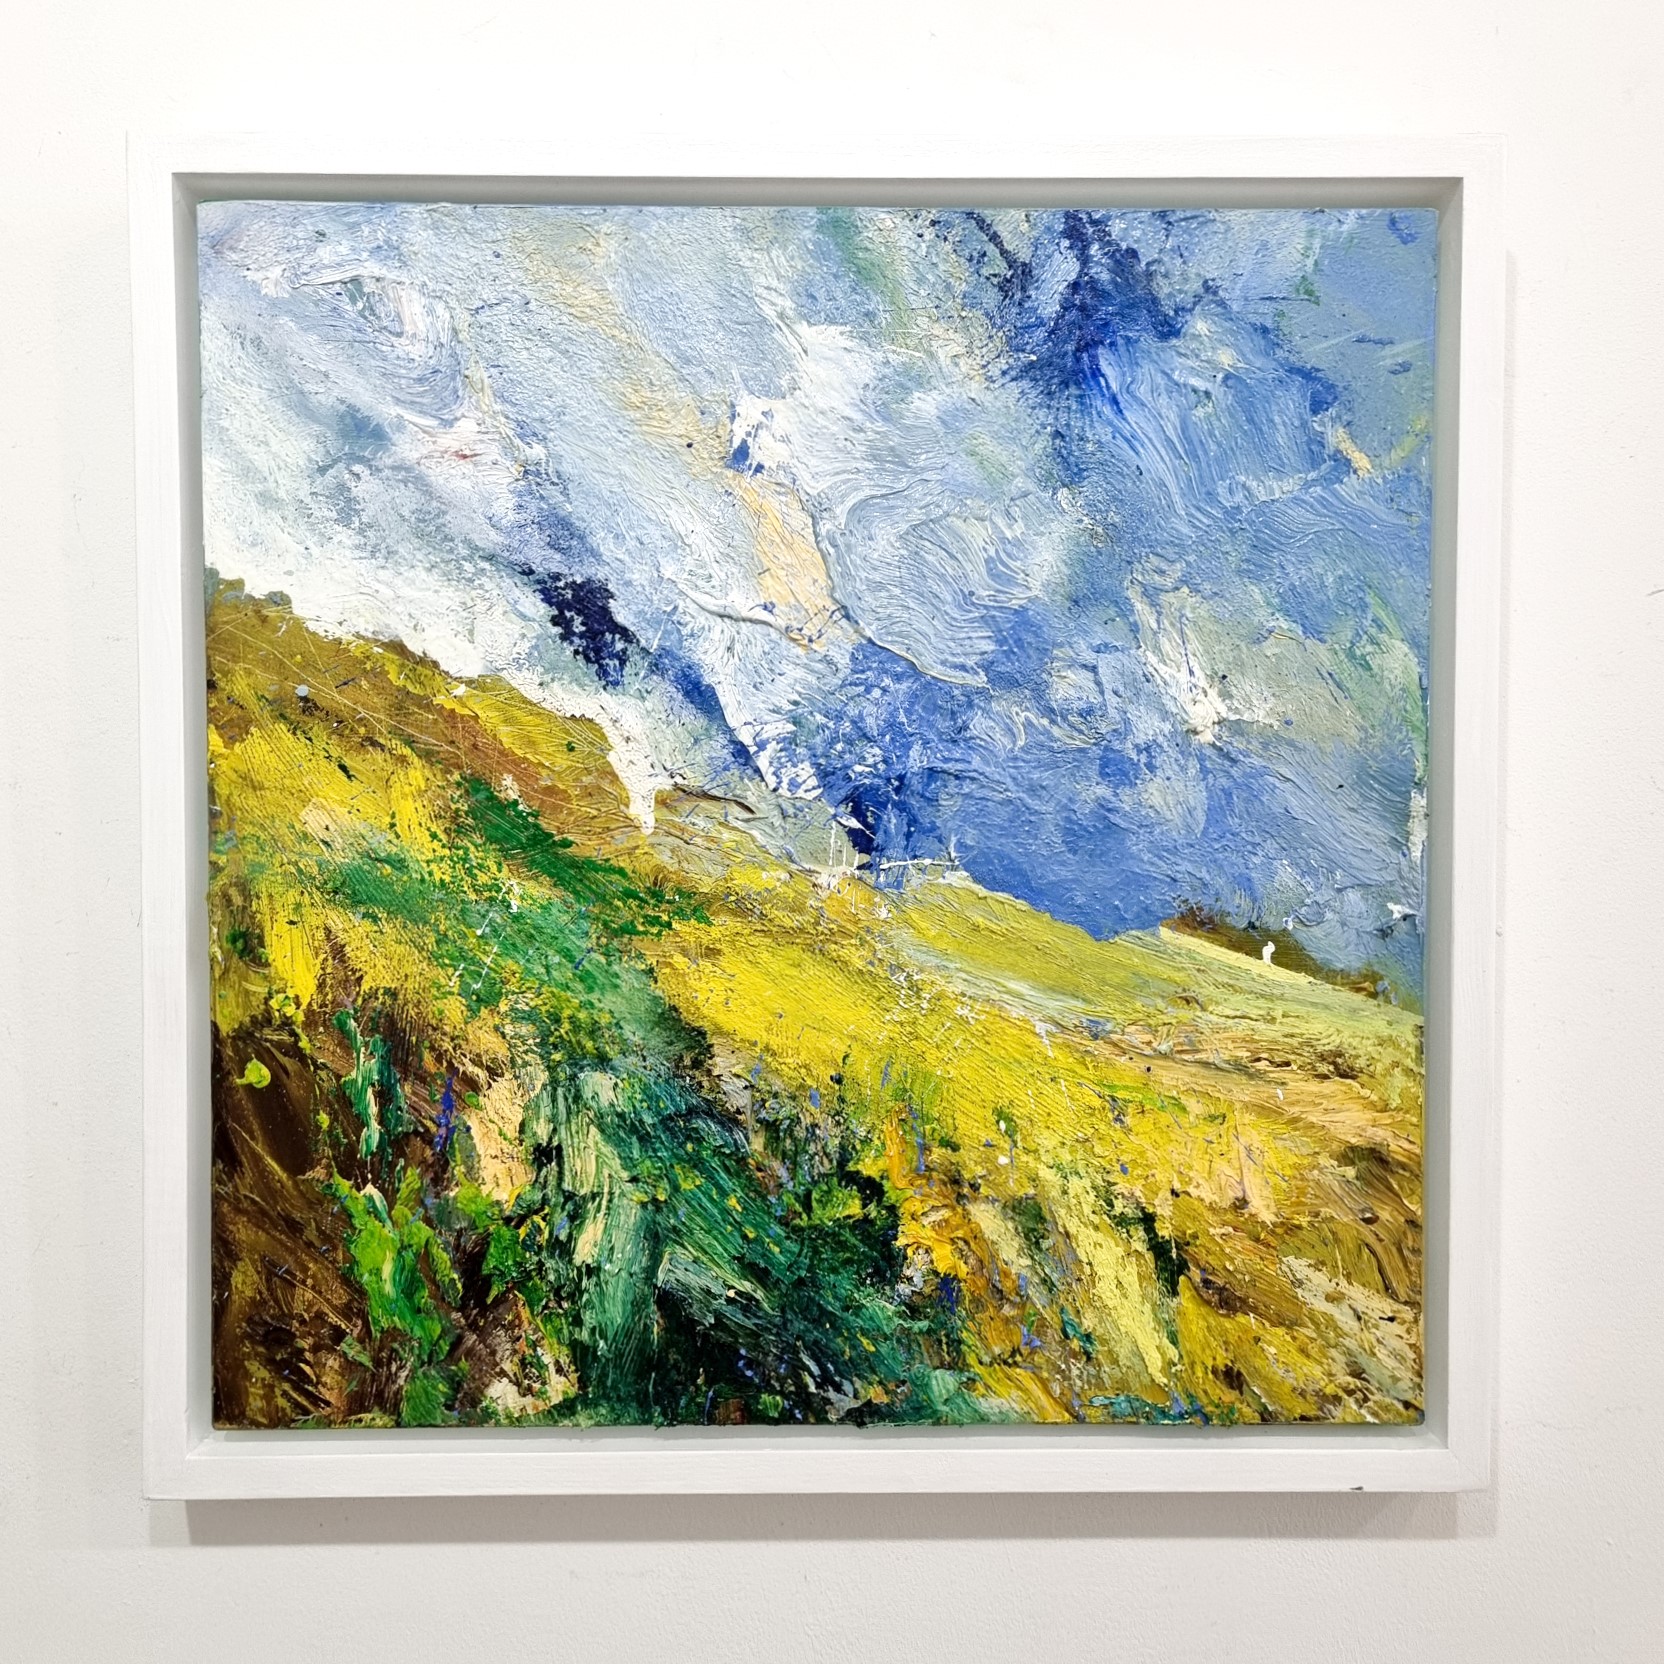 'Yellow Hillside, Skylarks' by artist Matthew Bourne